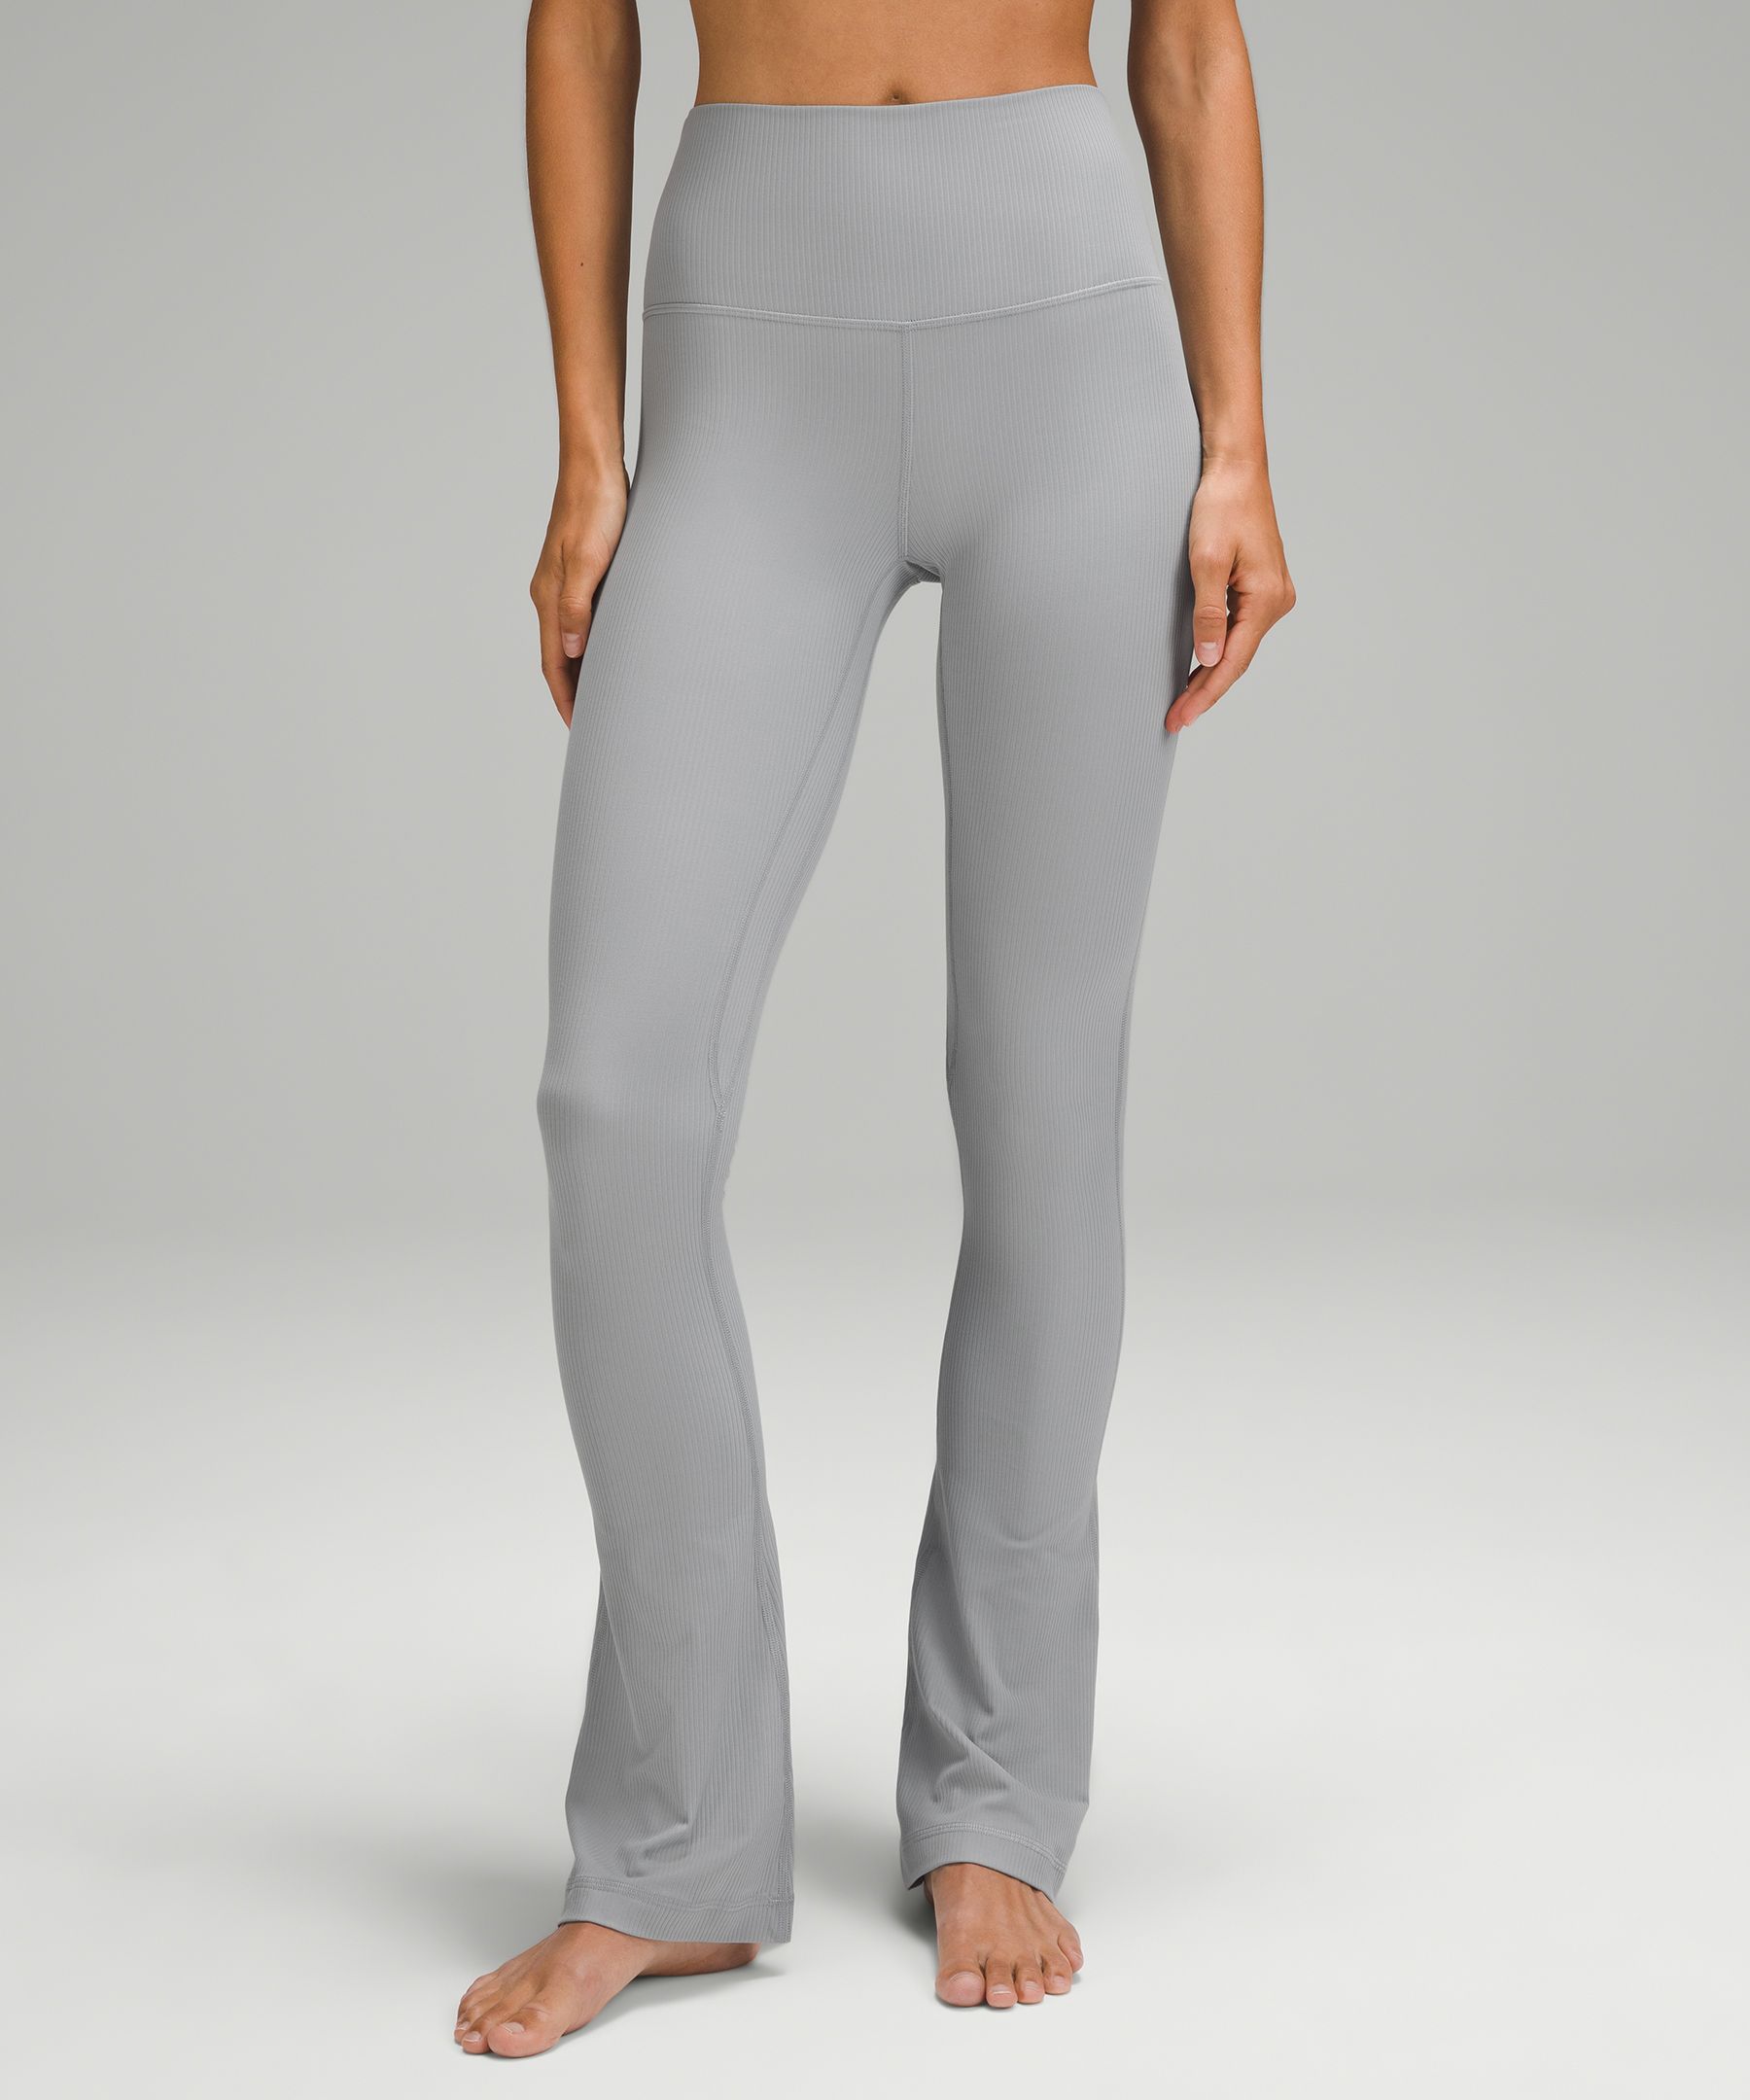 Lululemon align short 8 pockets size 4 rhino grey, Women's Fashion